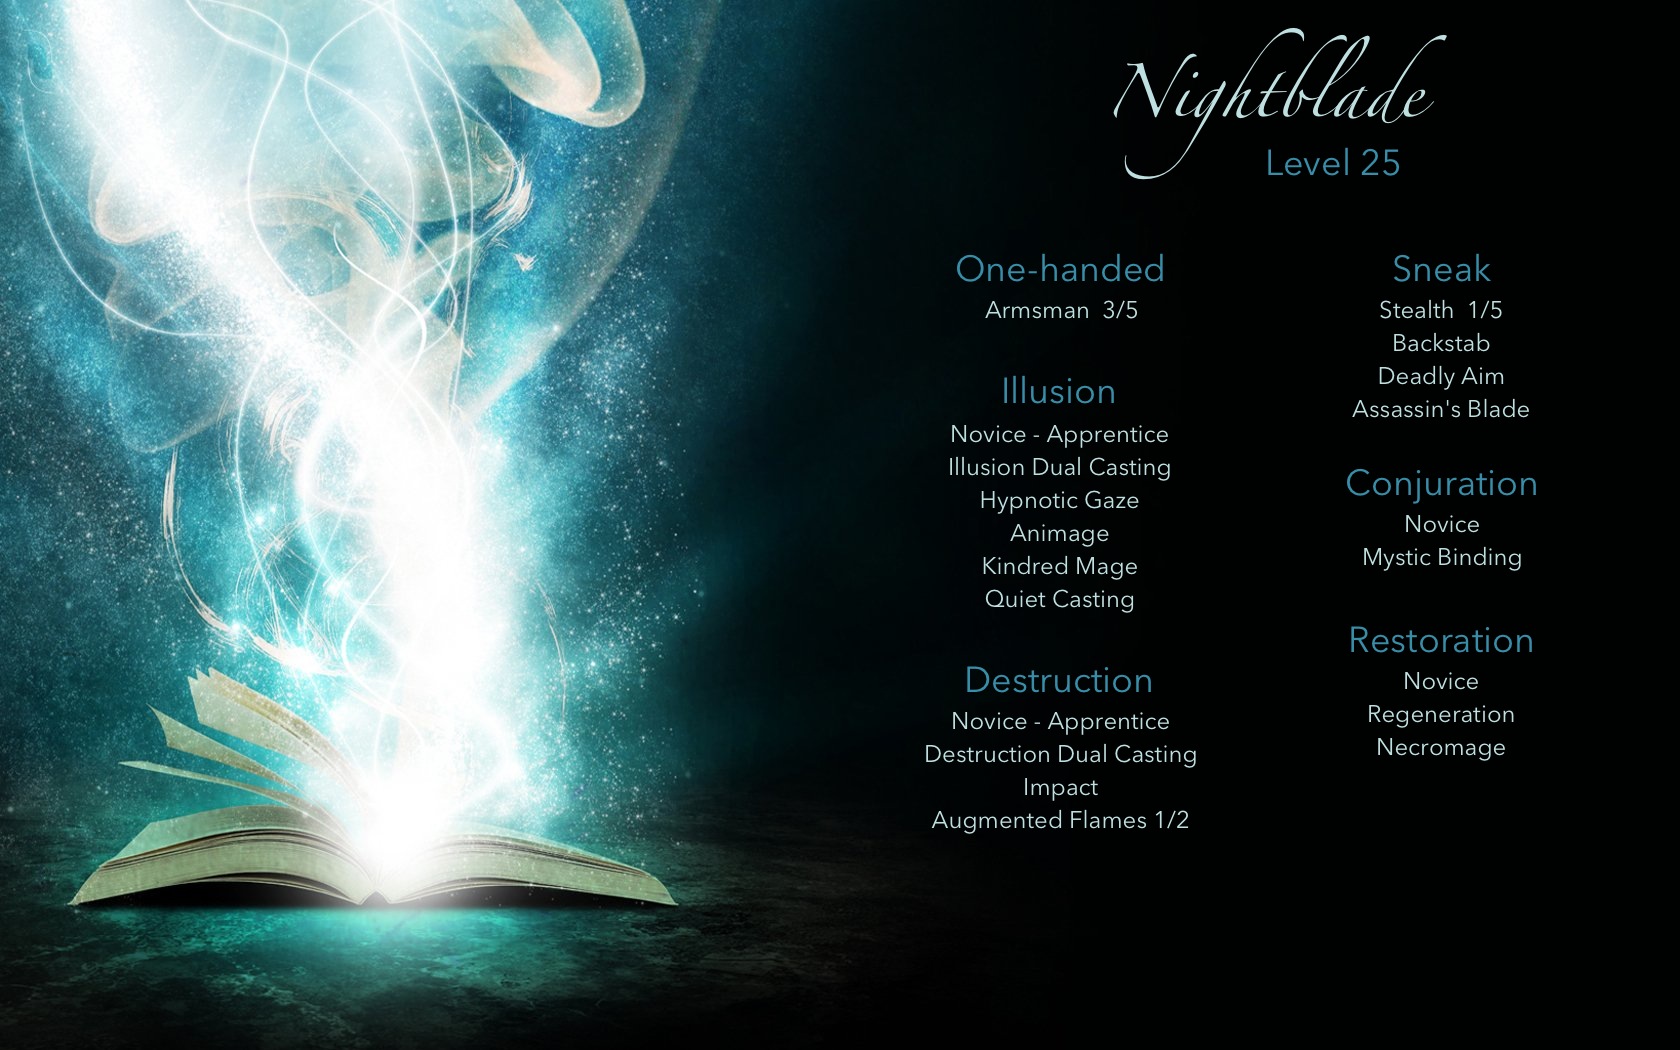 Nightblade Level 25